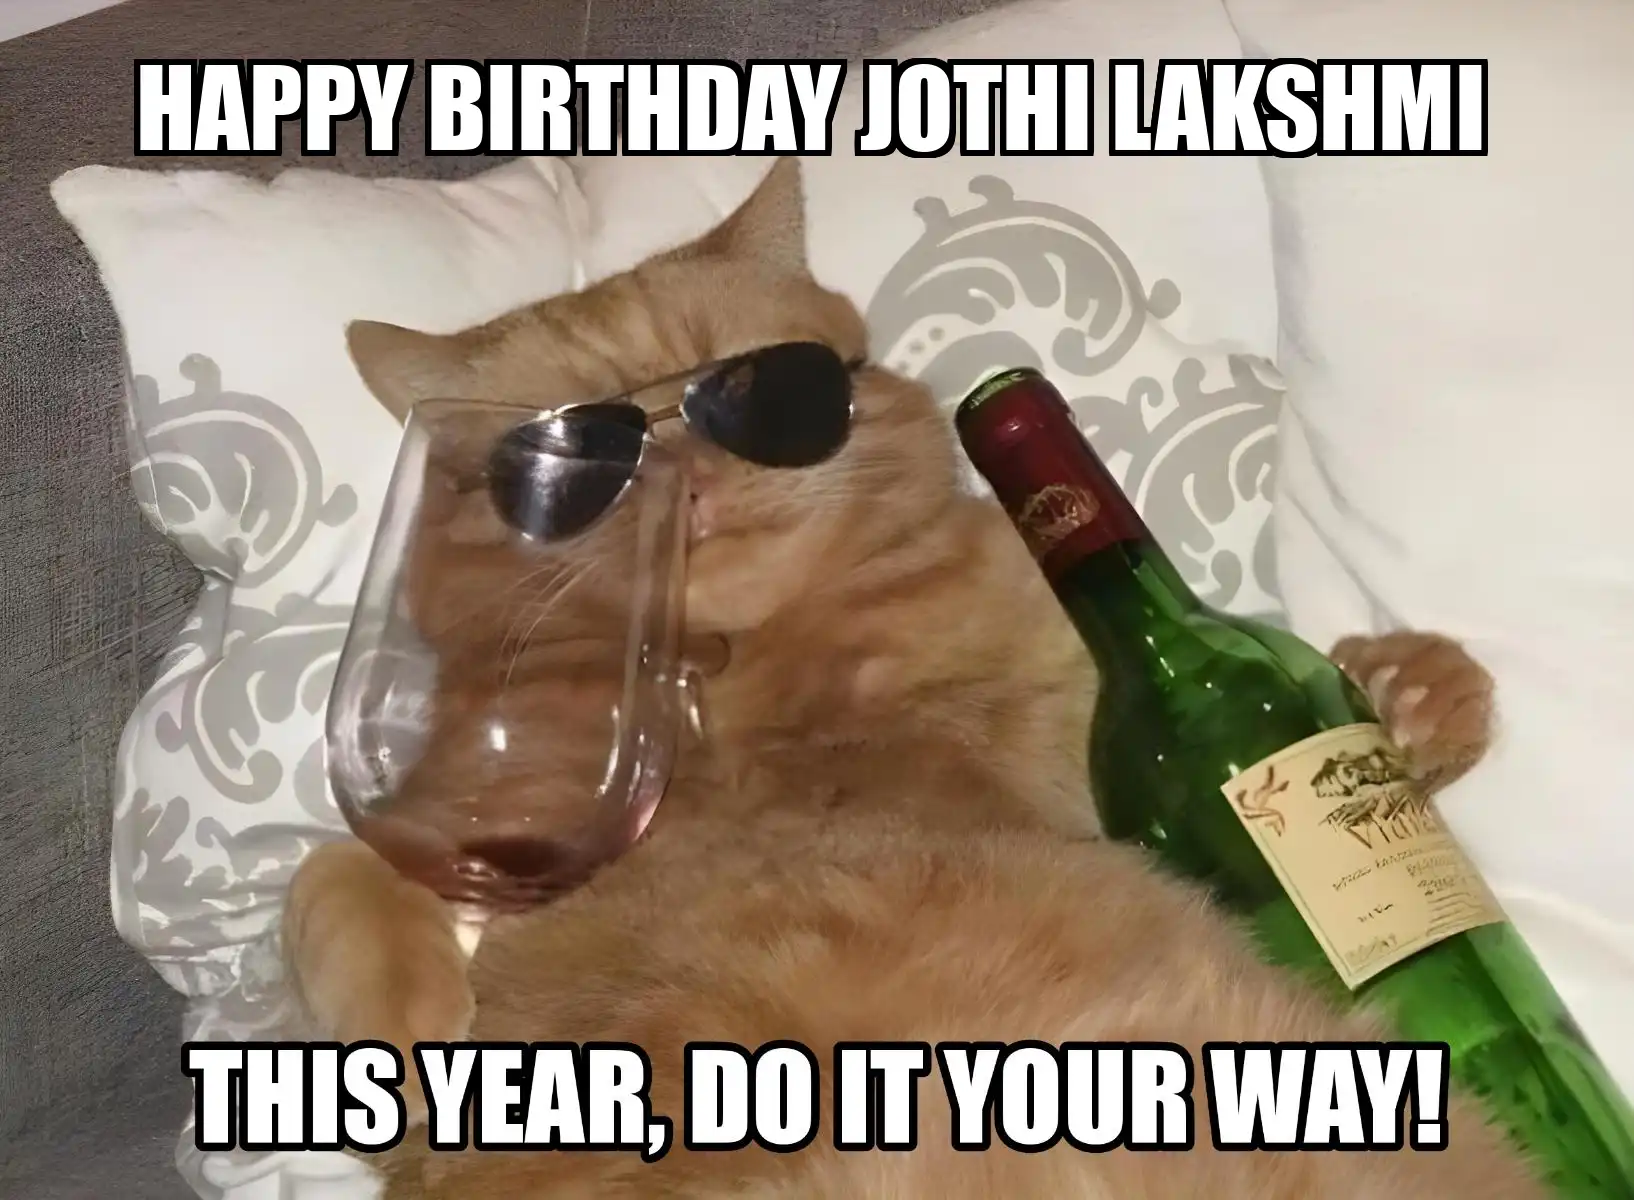 Happy Birthday Jothi lakshmi This Year Do It Your Way Meme